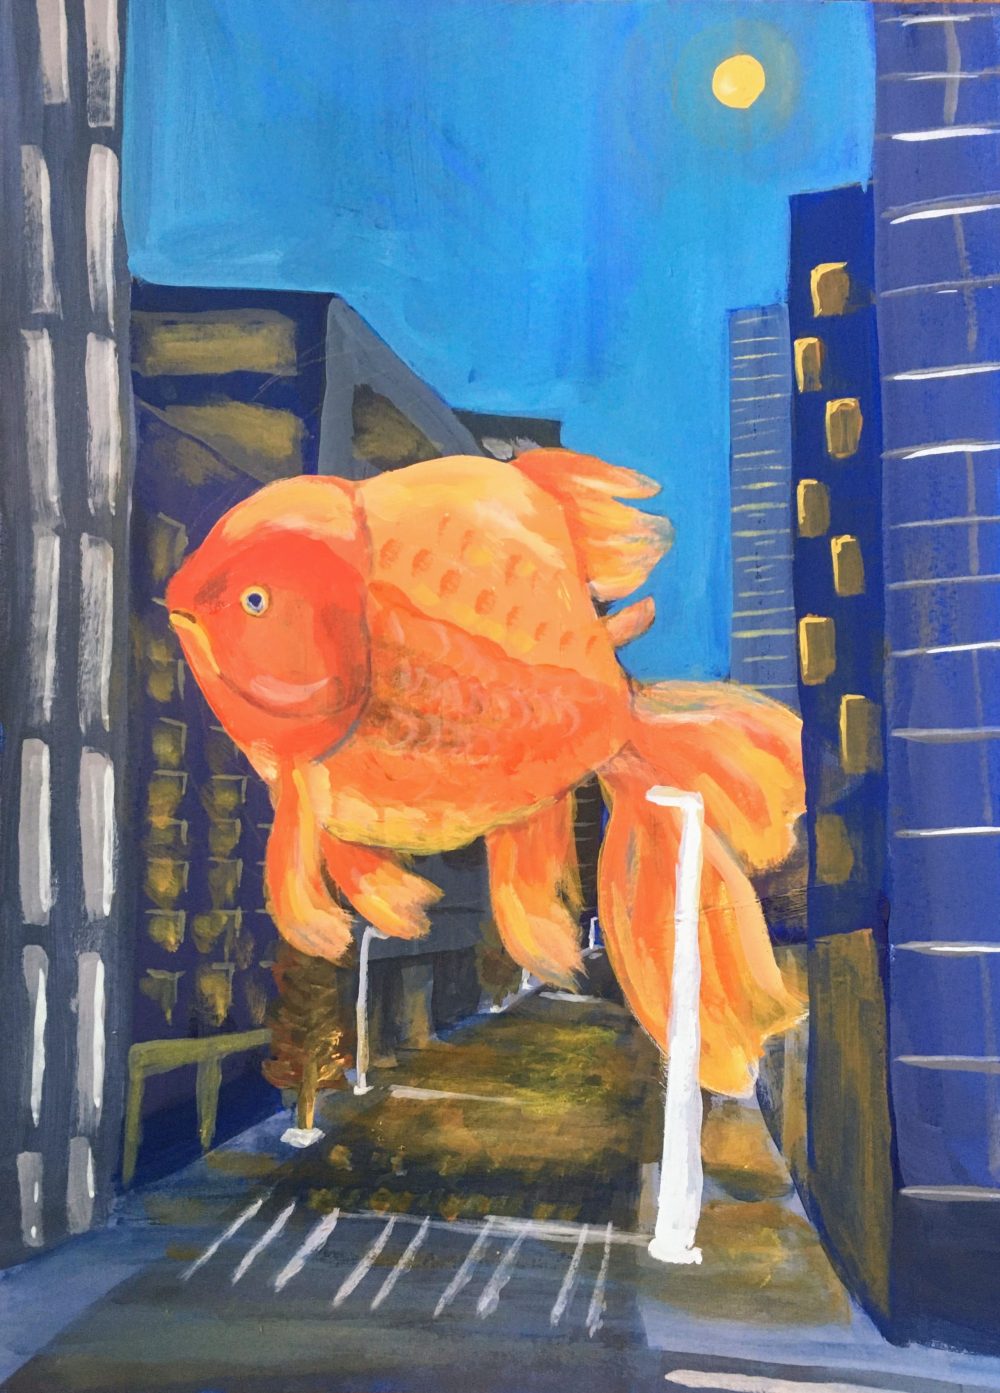 A larger-than-life goldfish floats through an empty, blue city.